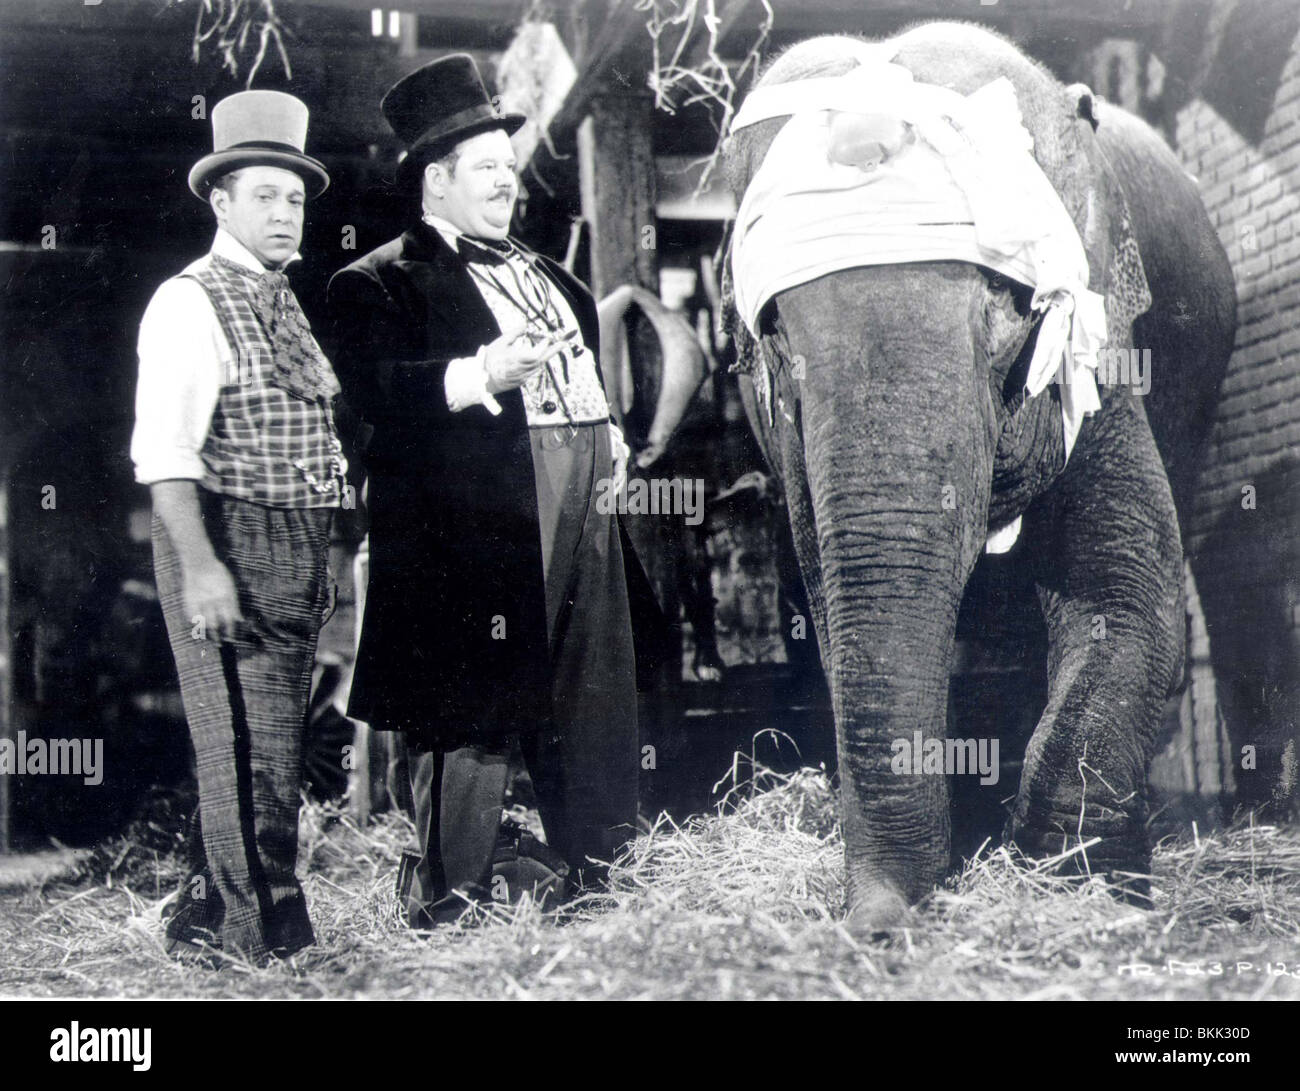 ZENOBIA (1939) ELEPHANTS NEVER FORGET (ALT) HARRY LANGDON, OLIVER HARDY, GORDON DOUGLAS (DIR) ZNBA 001 P Stock Photo